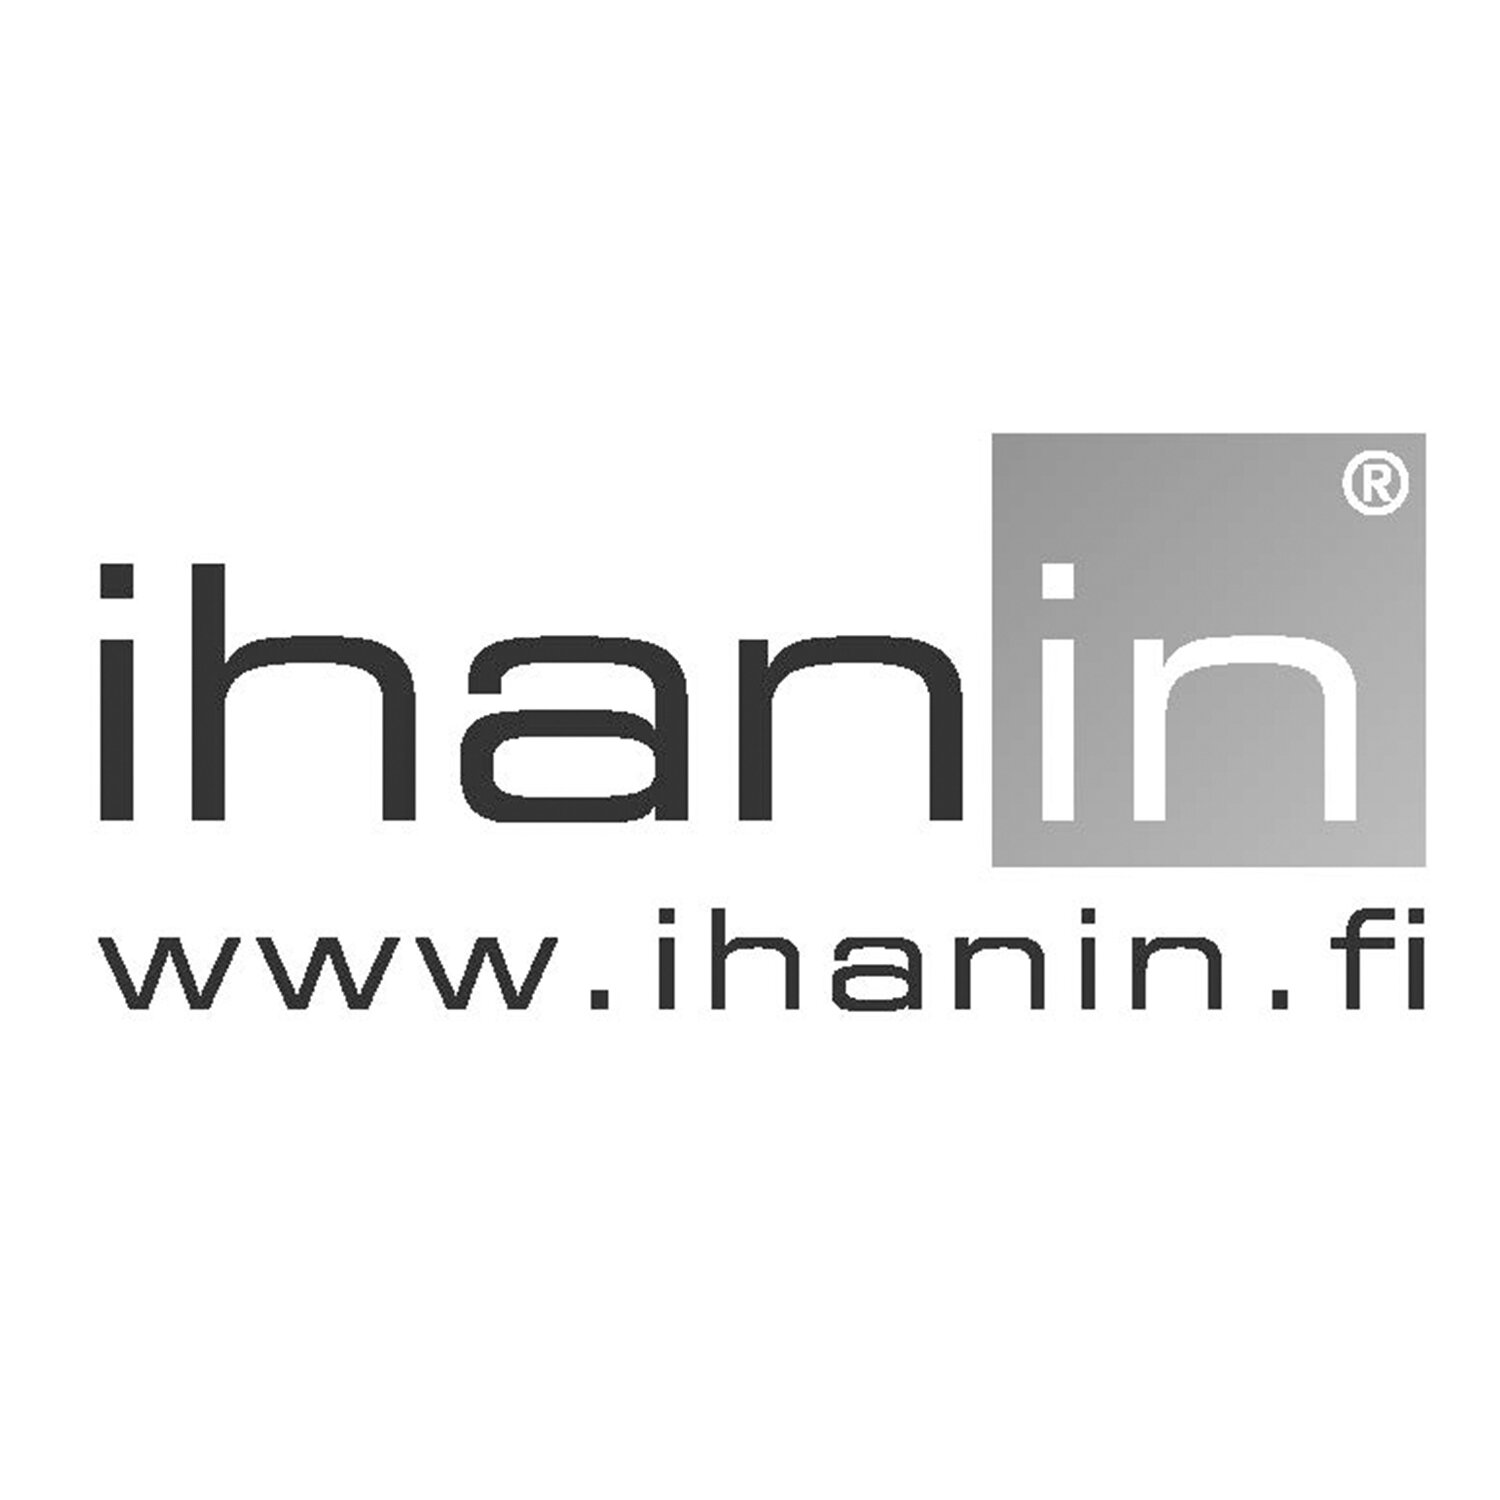 Ihanin